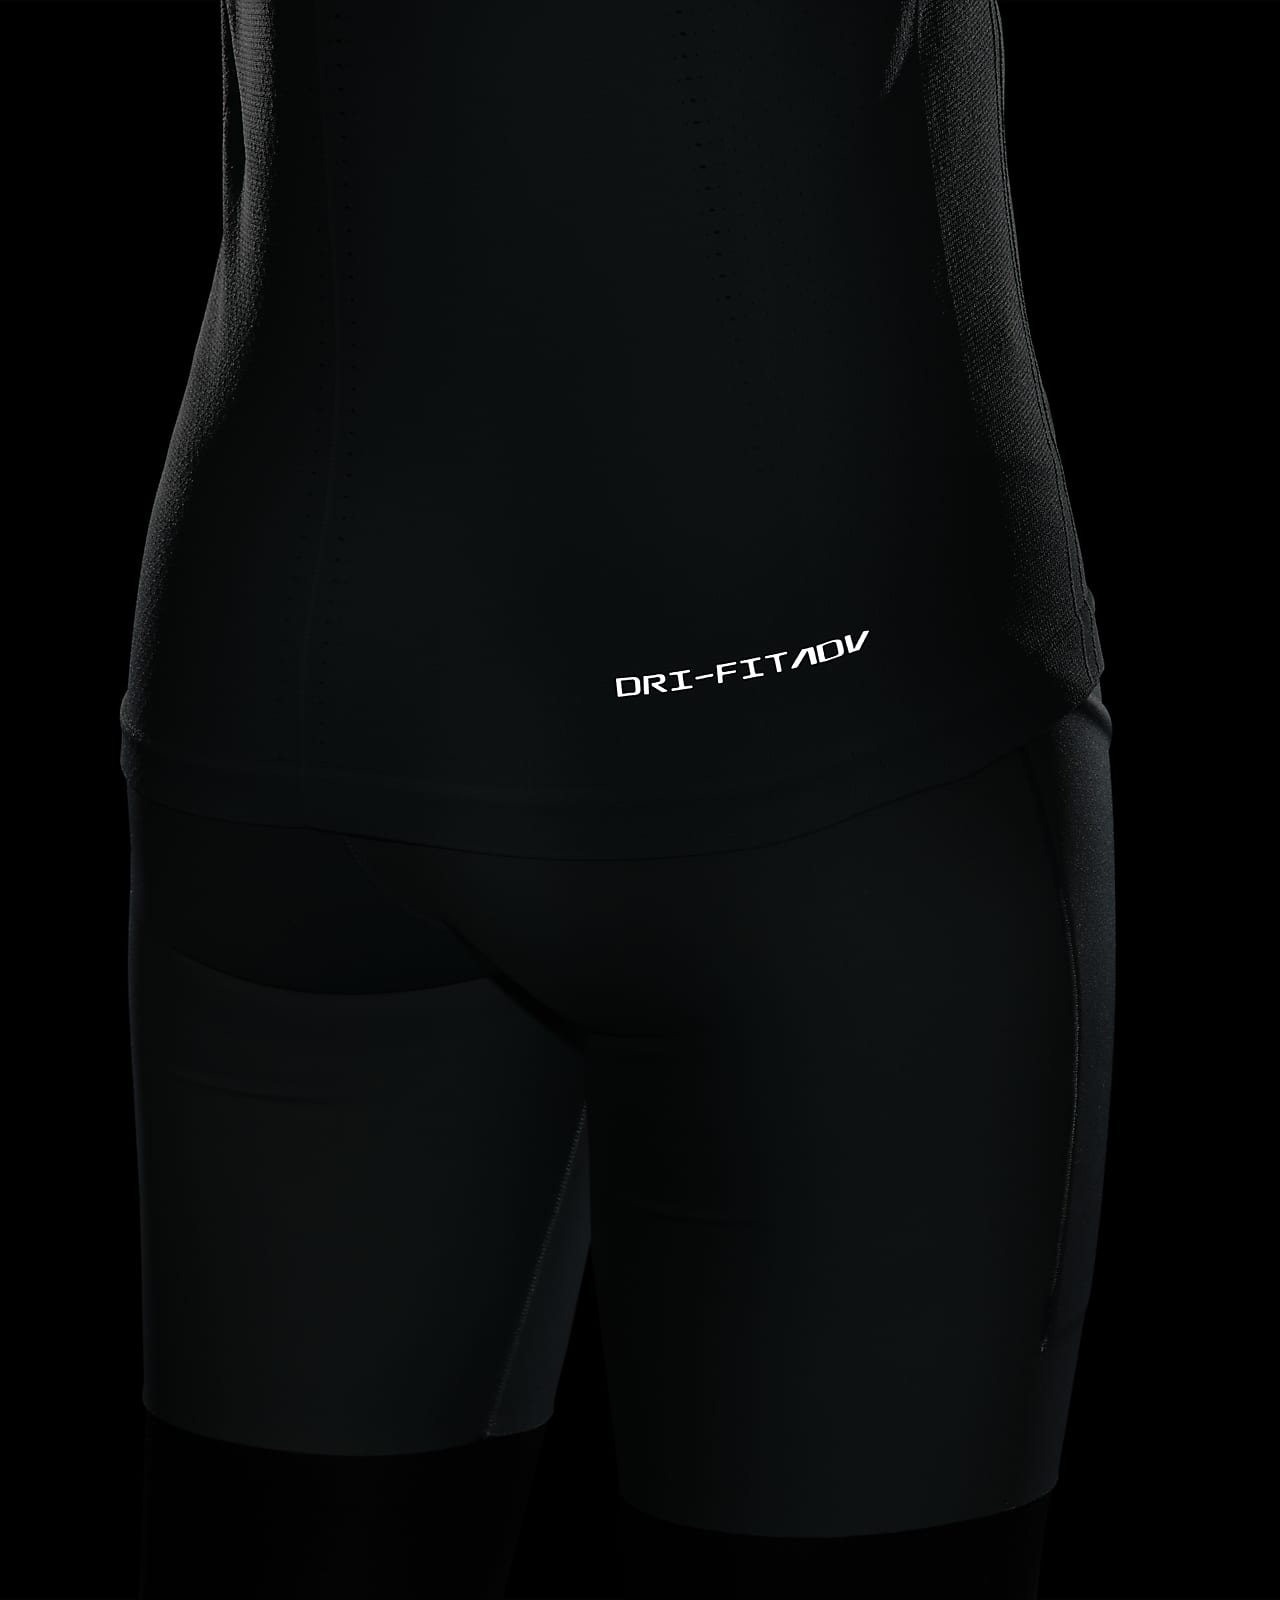 Nike Womens Dri Fit Legging Athletic Running Gym High Waist Black